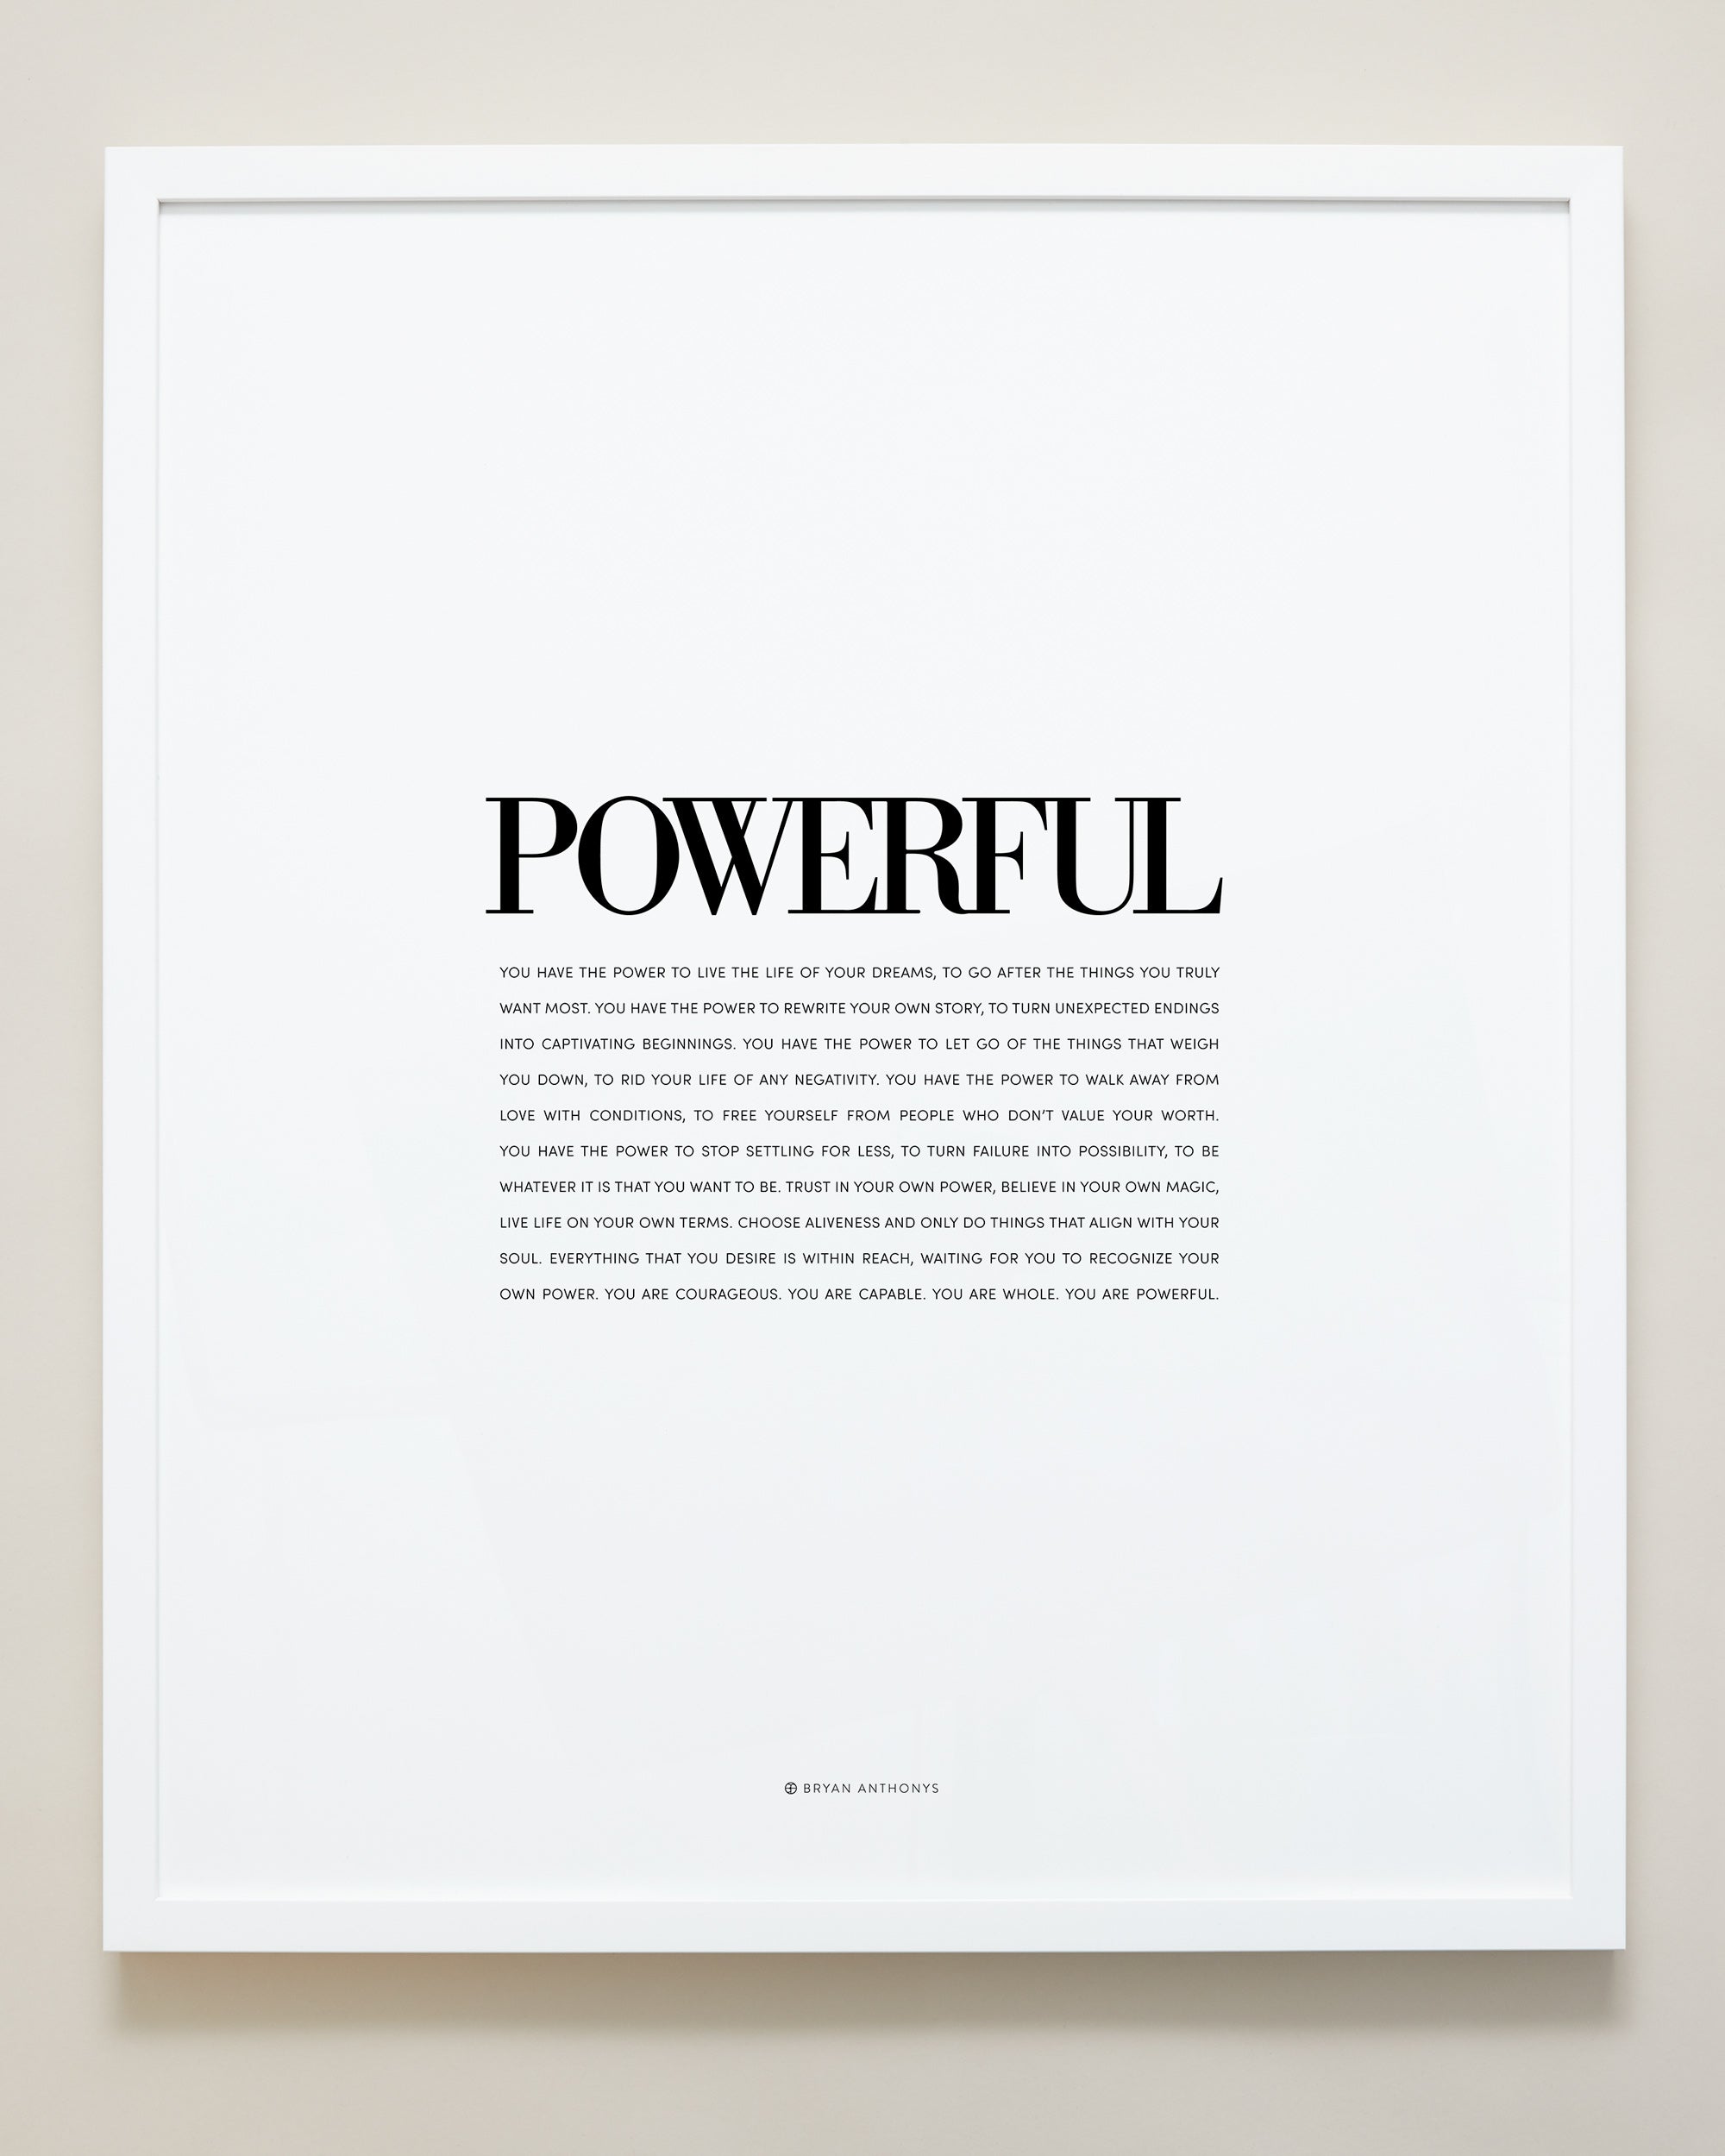 Bryan Anthonys Home Decor Purposeful Prints Powerful Editorial Framed Print White Frame 20x24